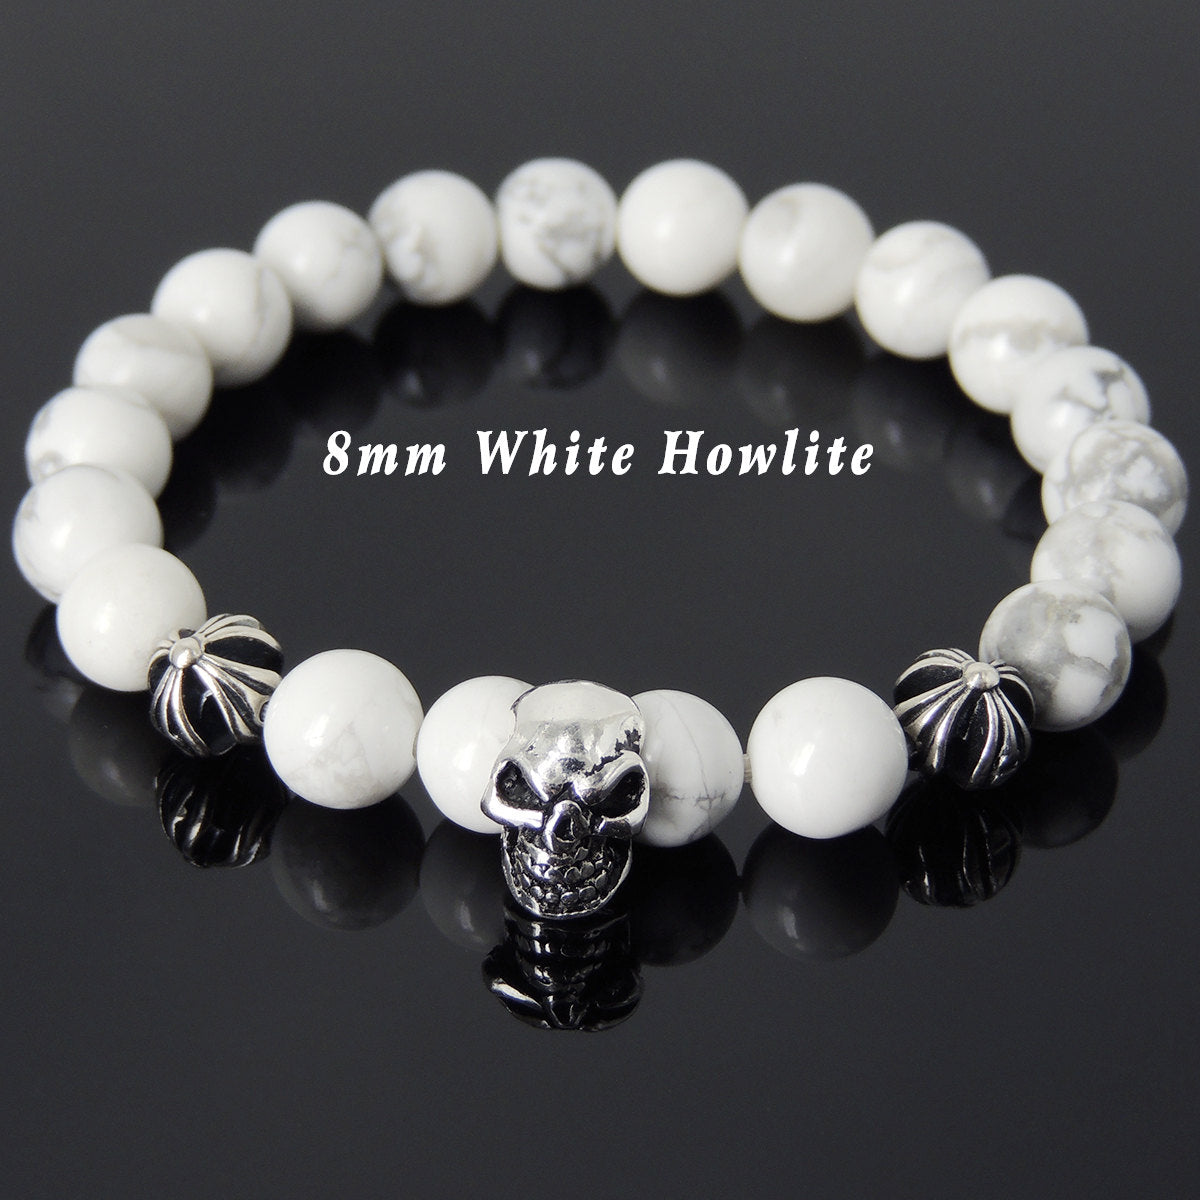 8mm White Howlite Healing Gemstone Bracelet with S925 Sterling Silver Protective Skull & Cross Beads- Handmade by Gem & Silver BR758